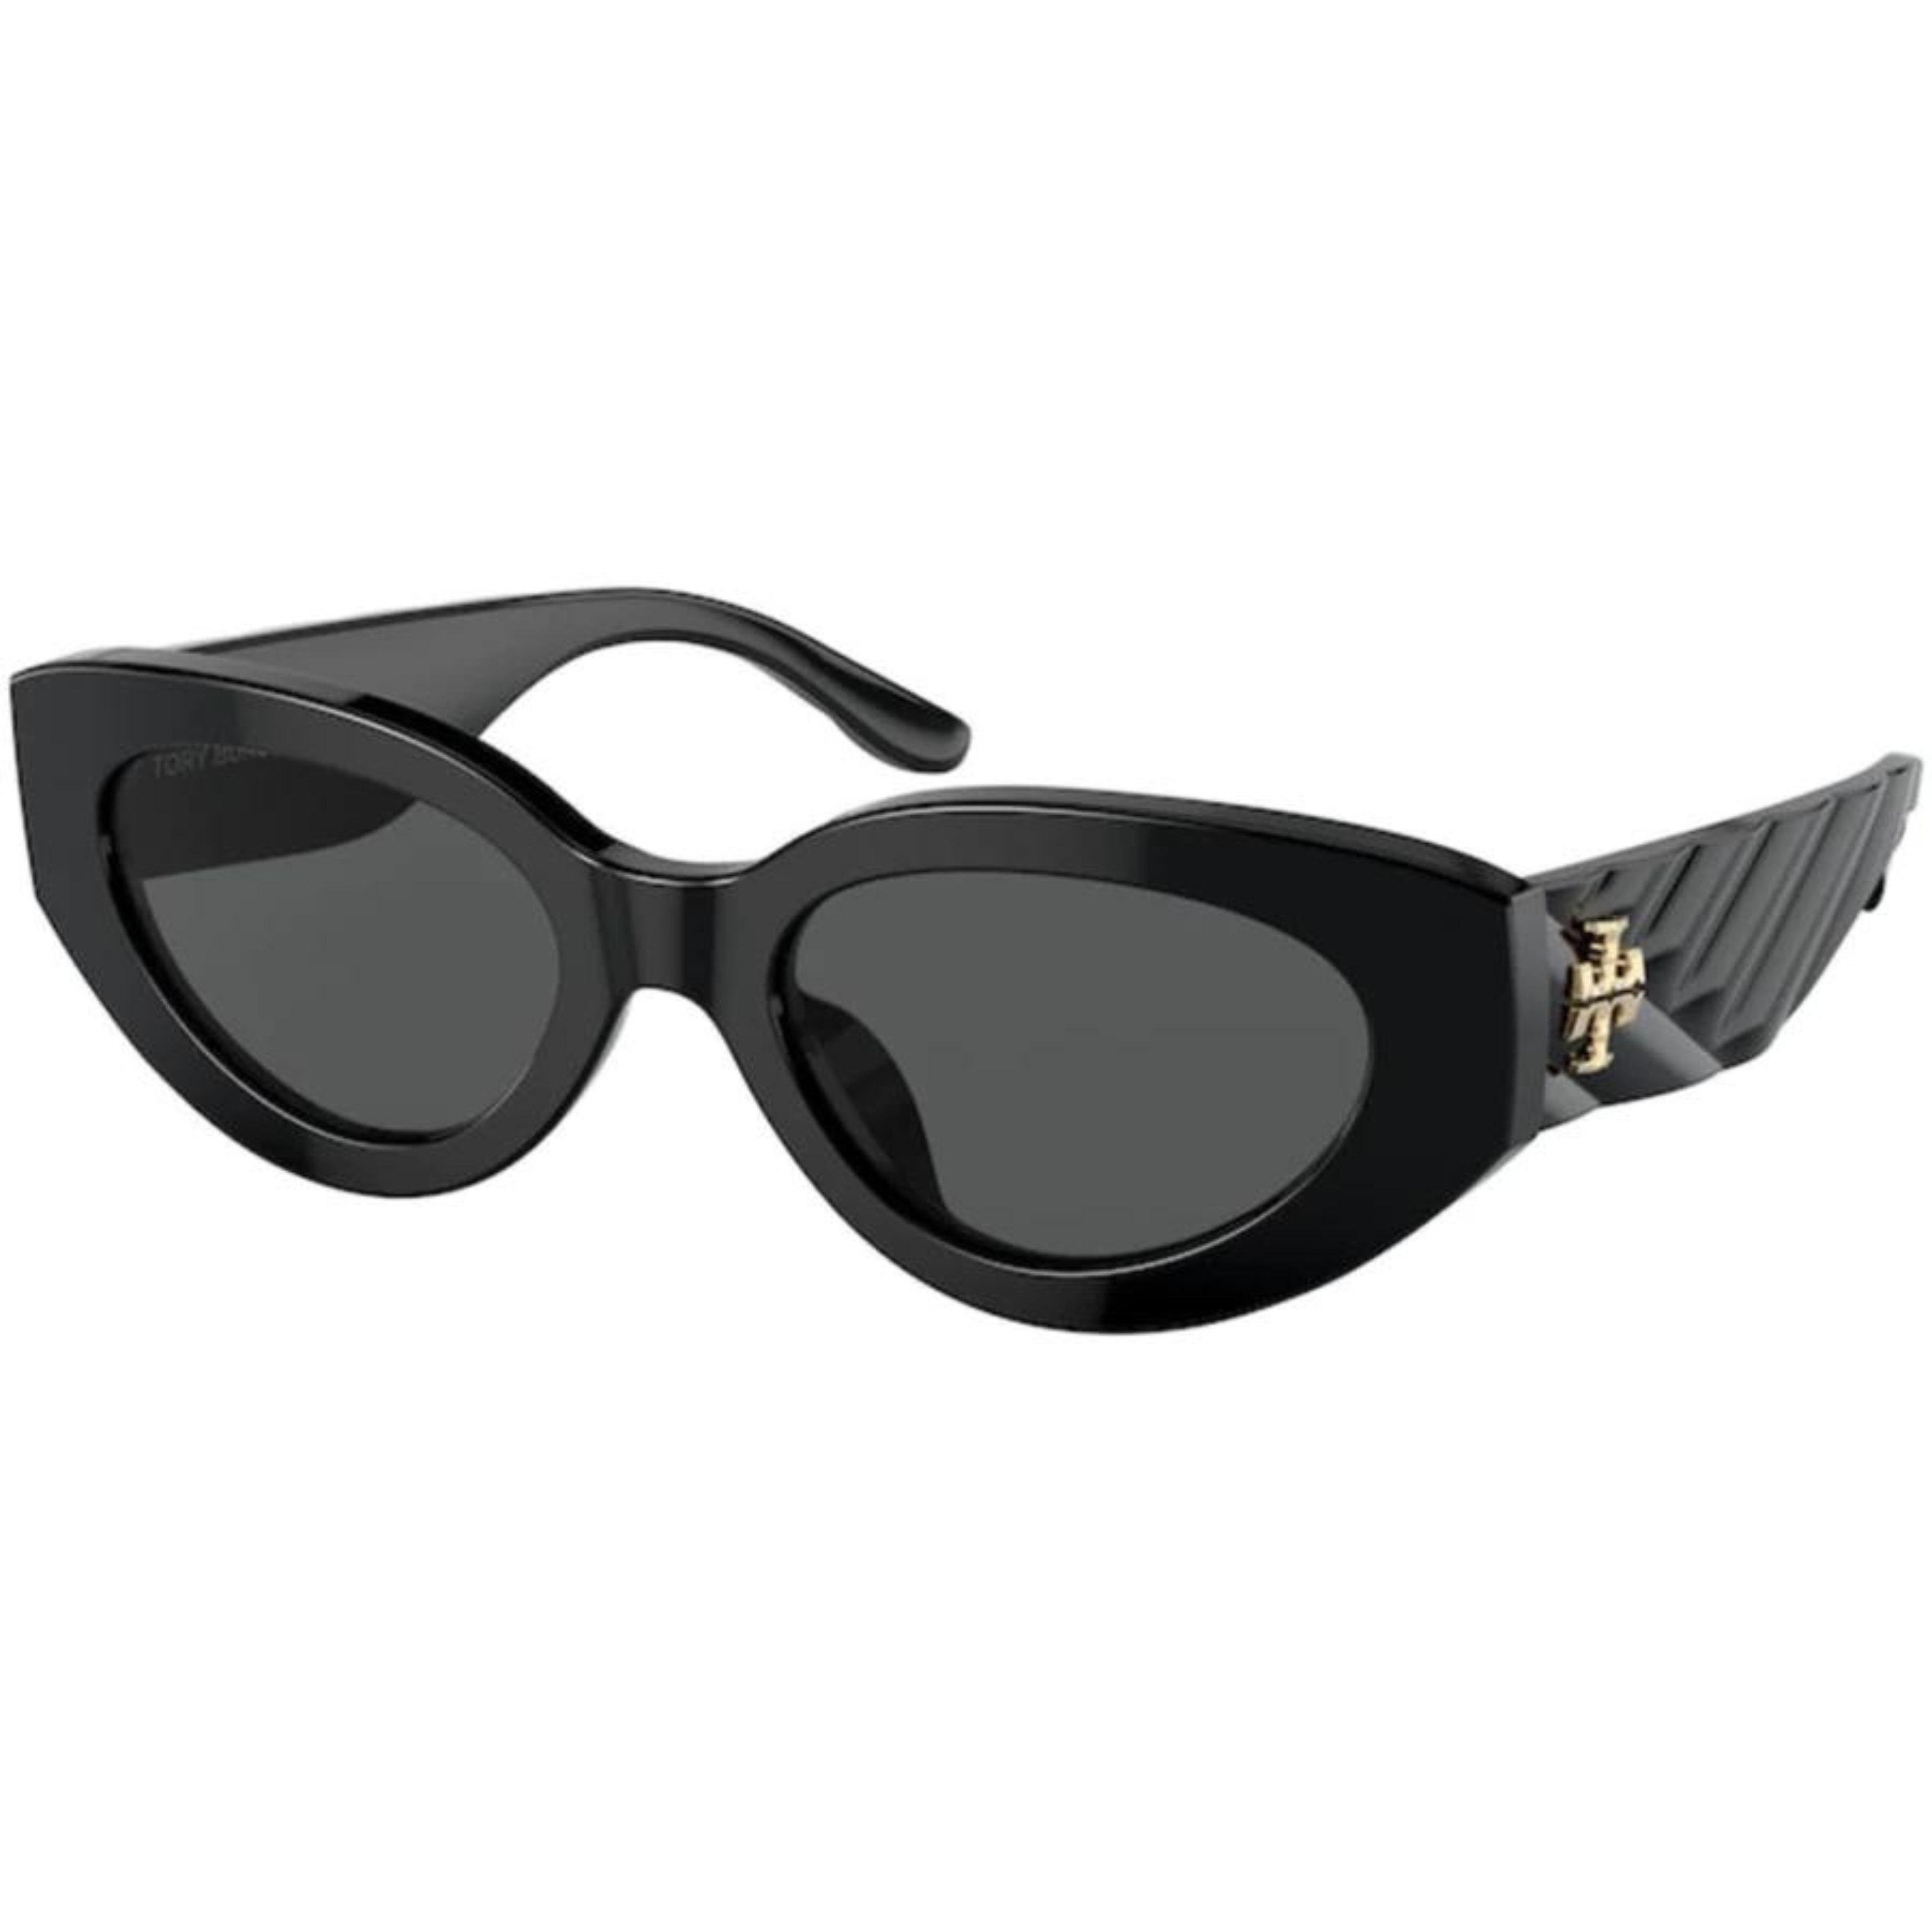 Tory Burch Sunglasses TY 7178 U 170987 Black, Black, One Size